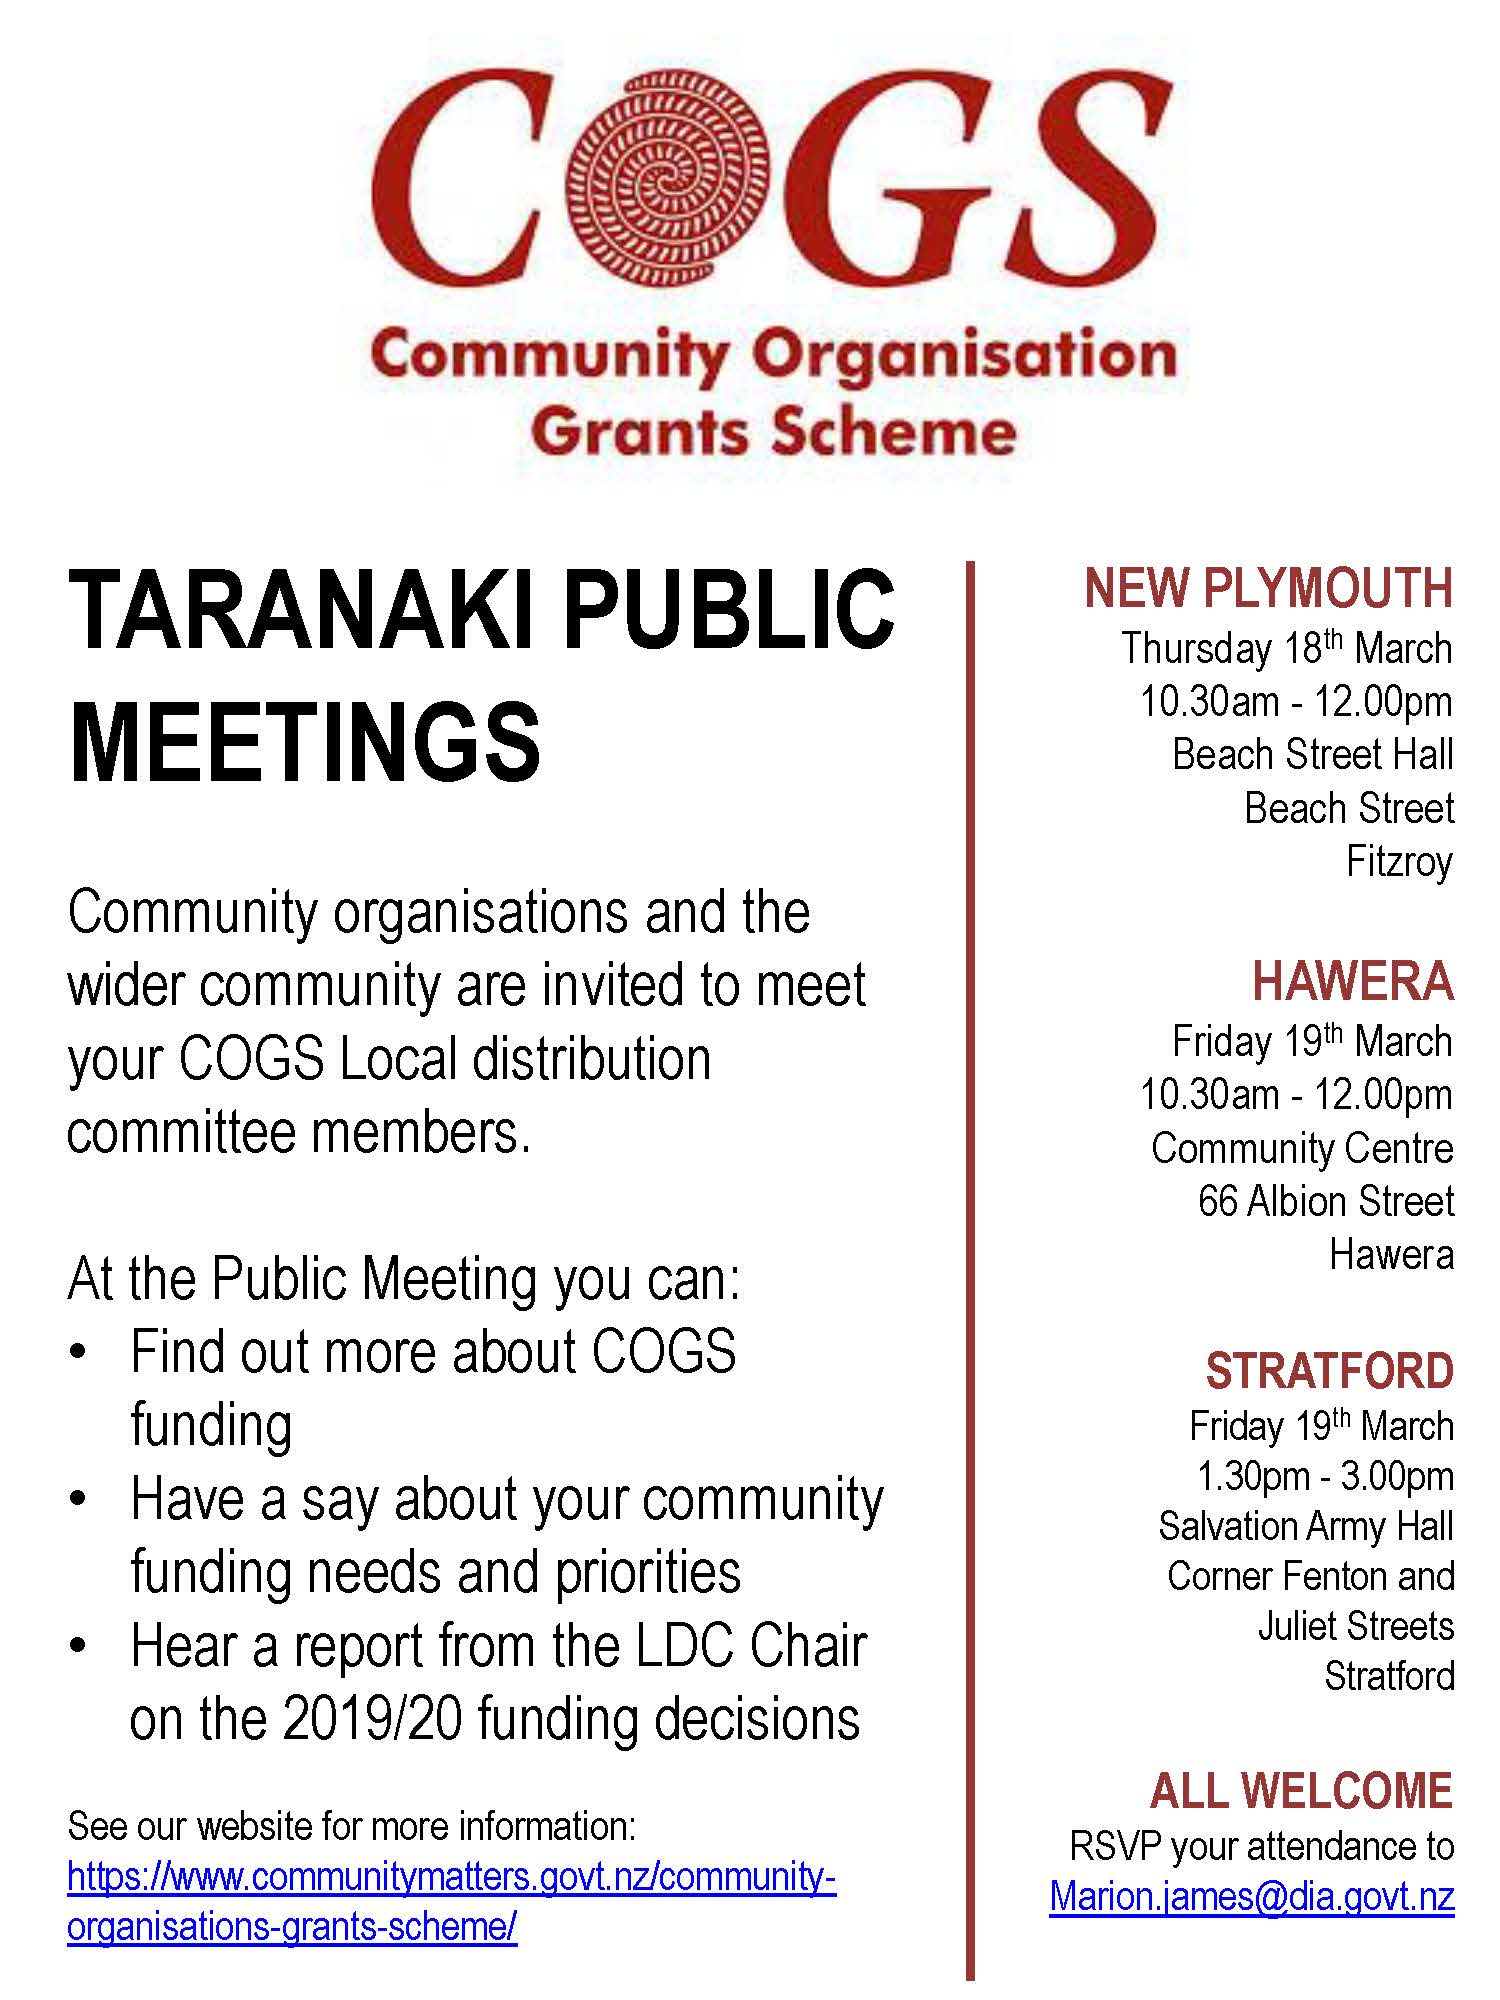 Poster highlighting the Taranaki Public Meetings for the Community Organisation Grants Scheme